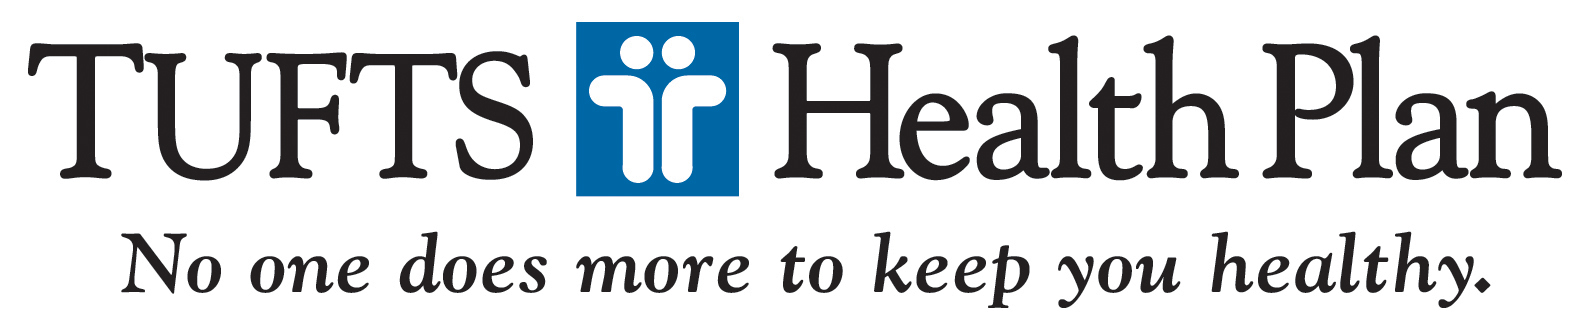 Tufts Health Plan – NYHealthInsurer.com – New York Health Insurance